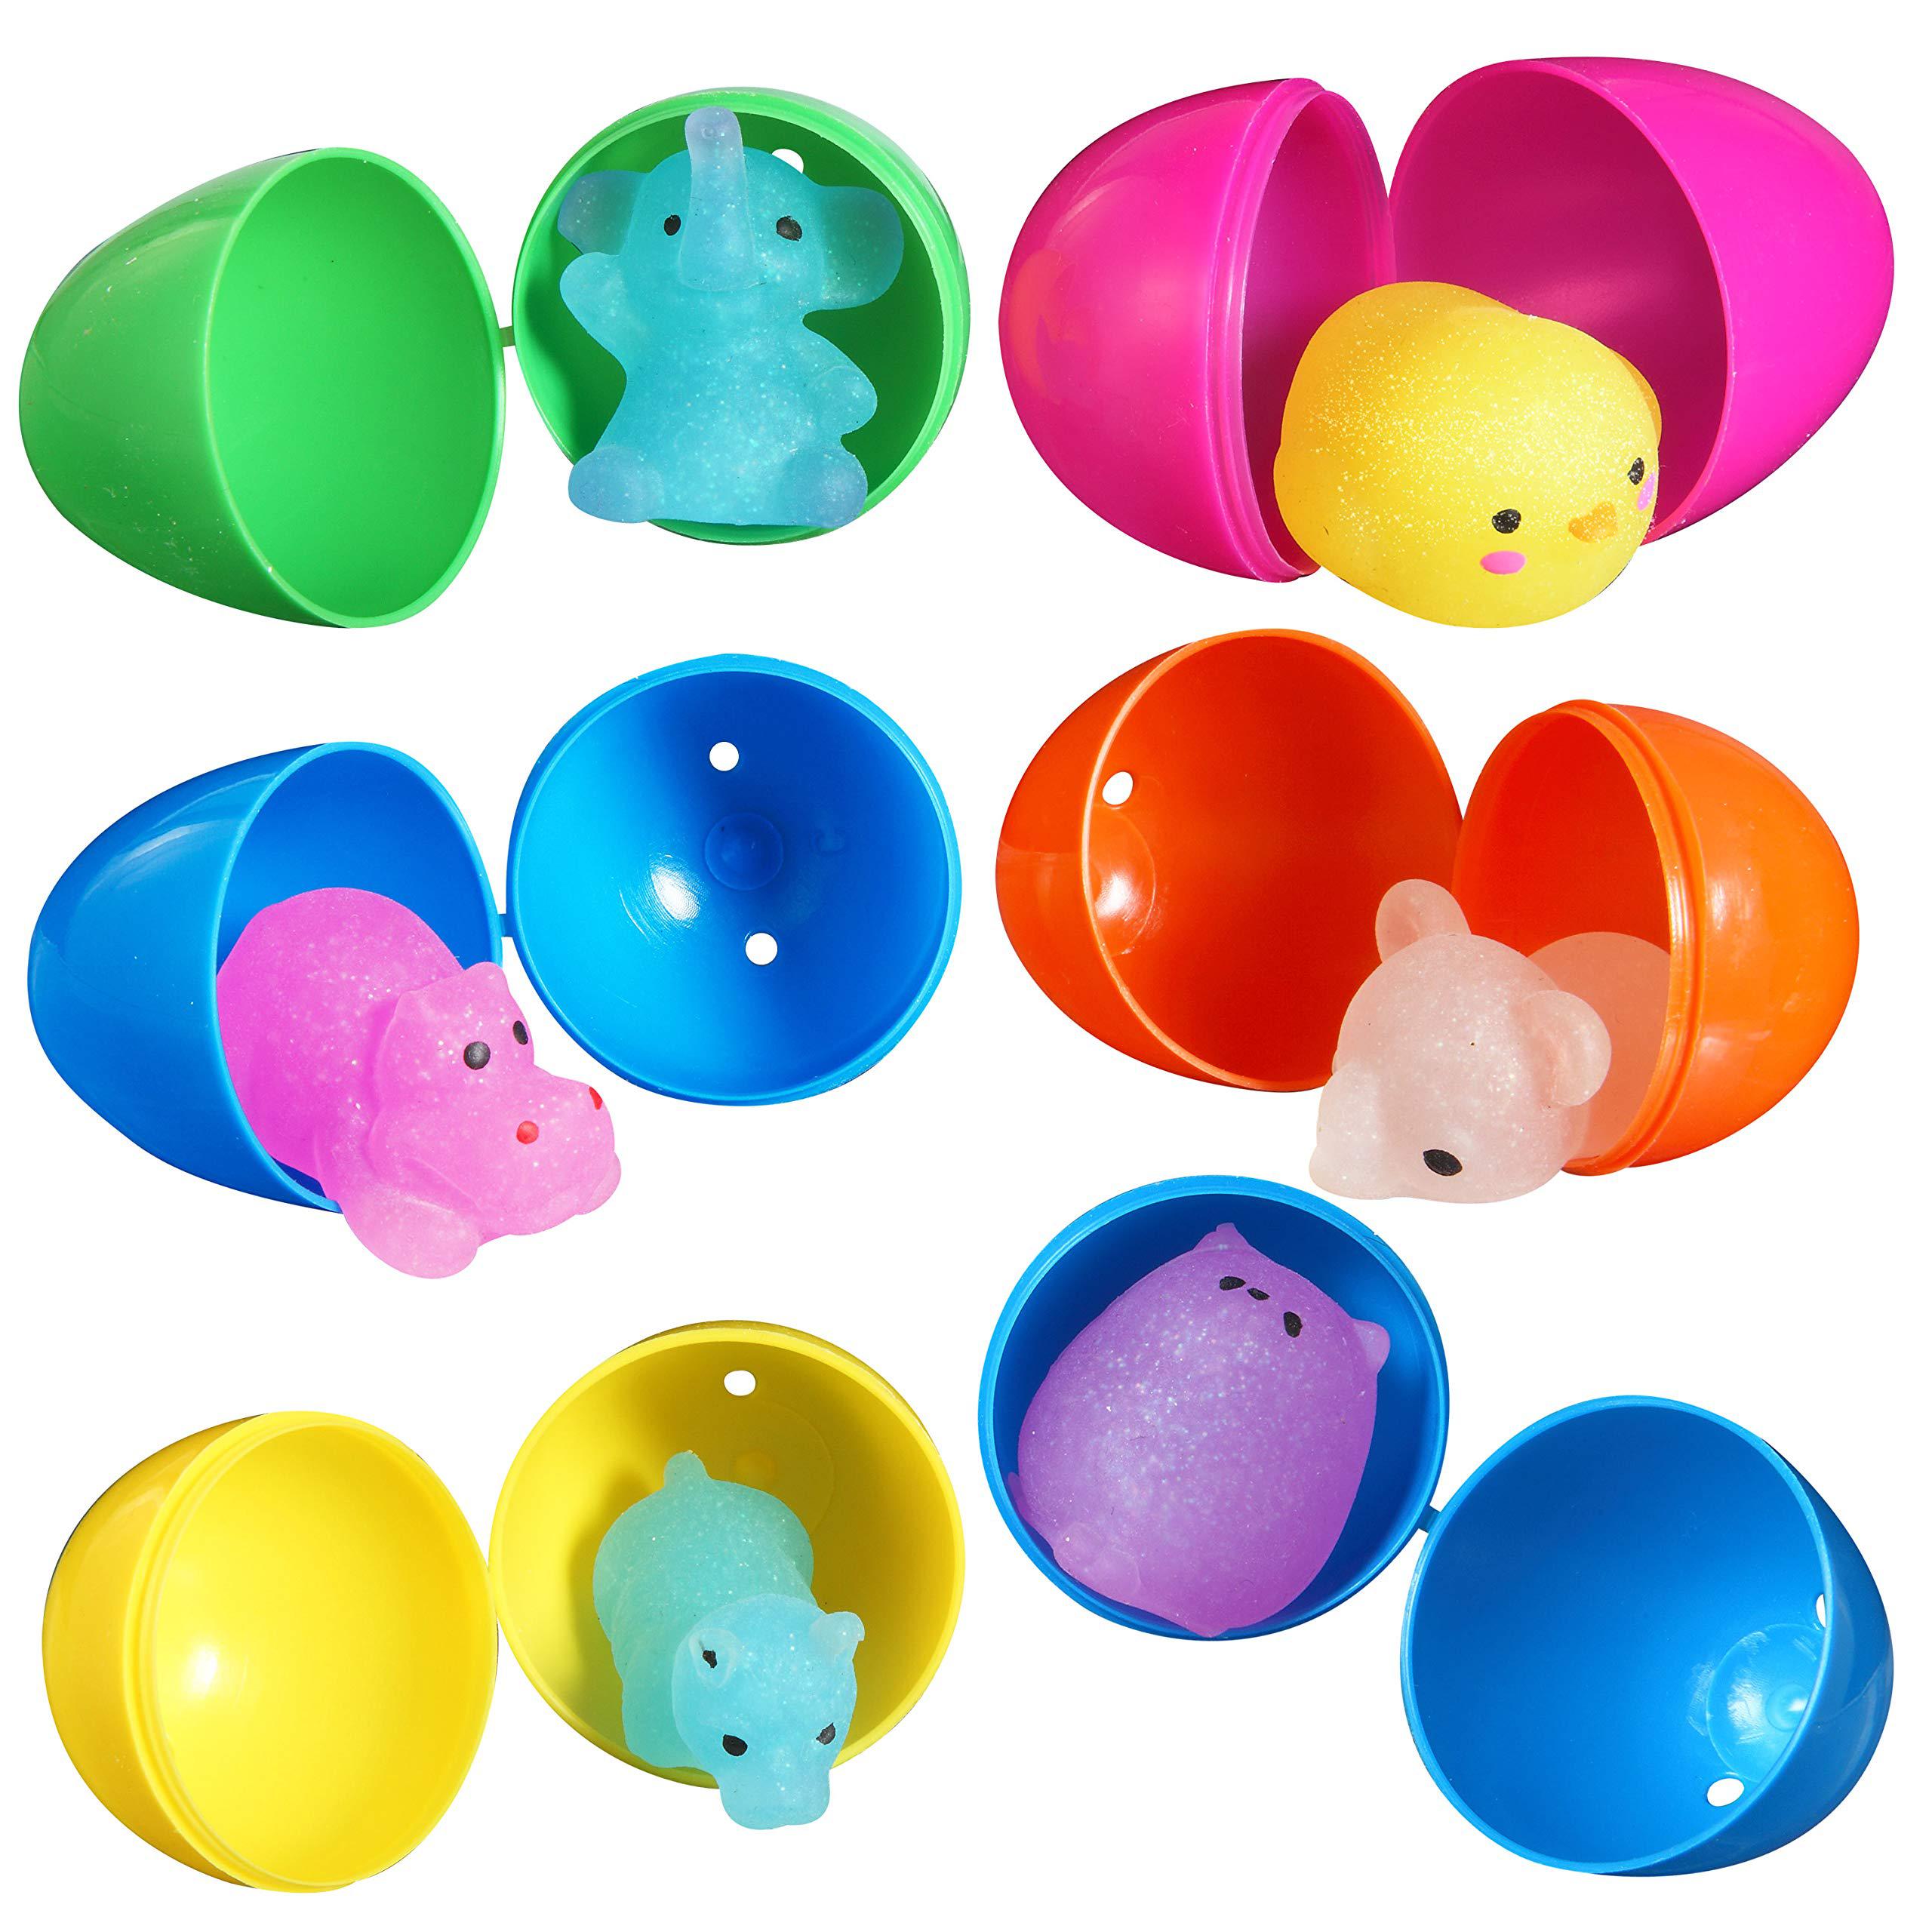 JOYIN 24 pcs mochi squishy prefilled easter eggs, glitter mochi squishy toys for kids easter basket stuffers fillers, easter egg pa